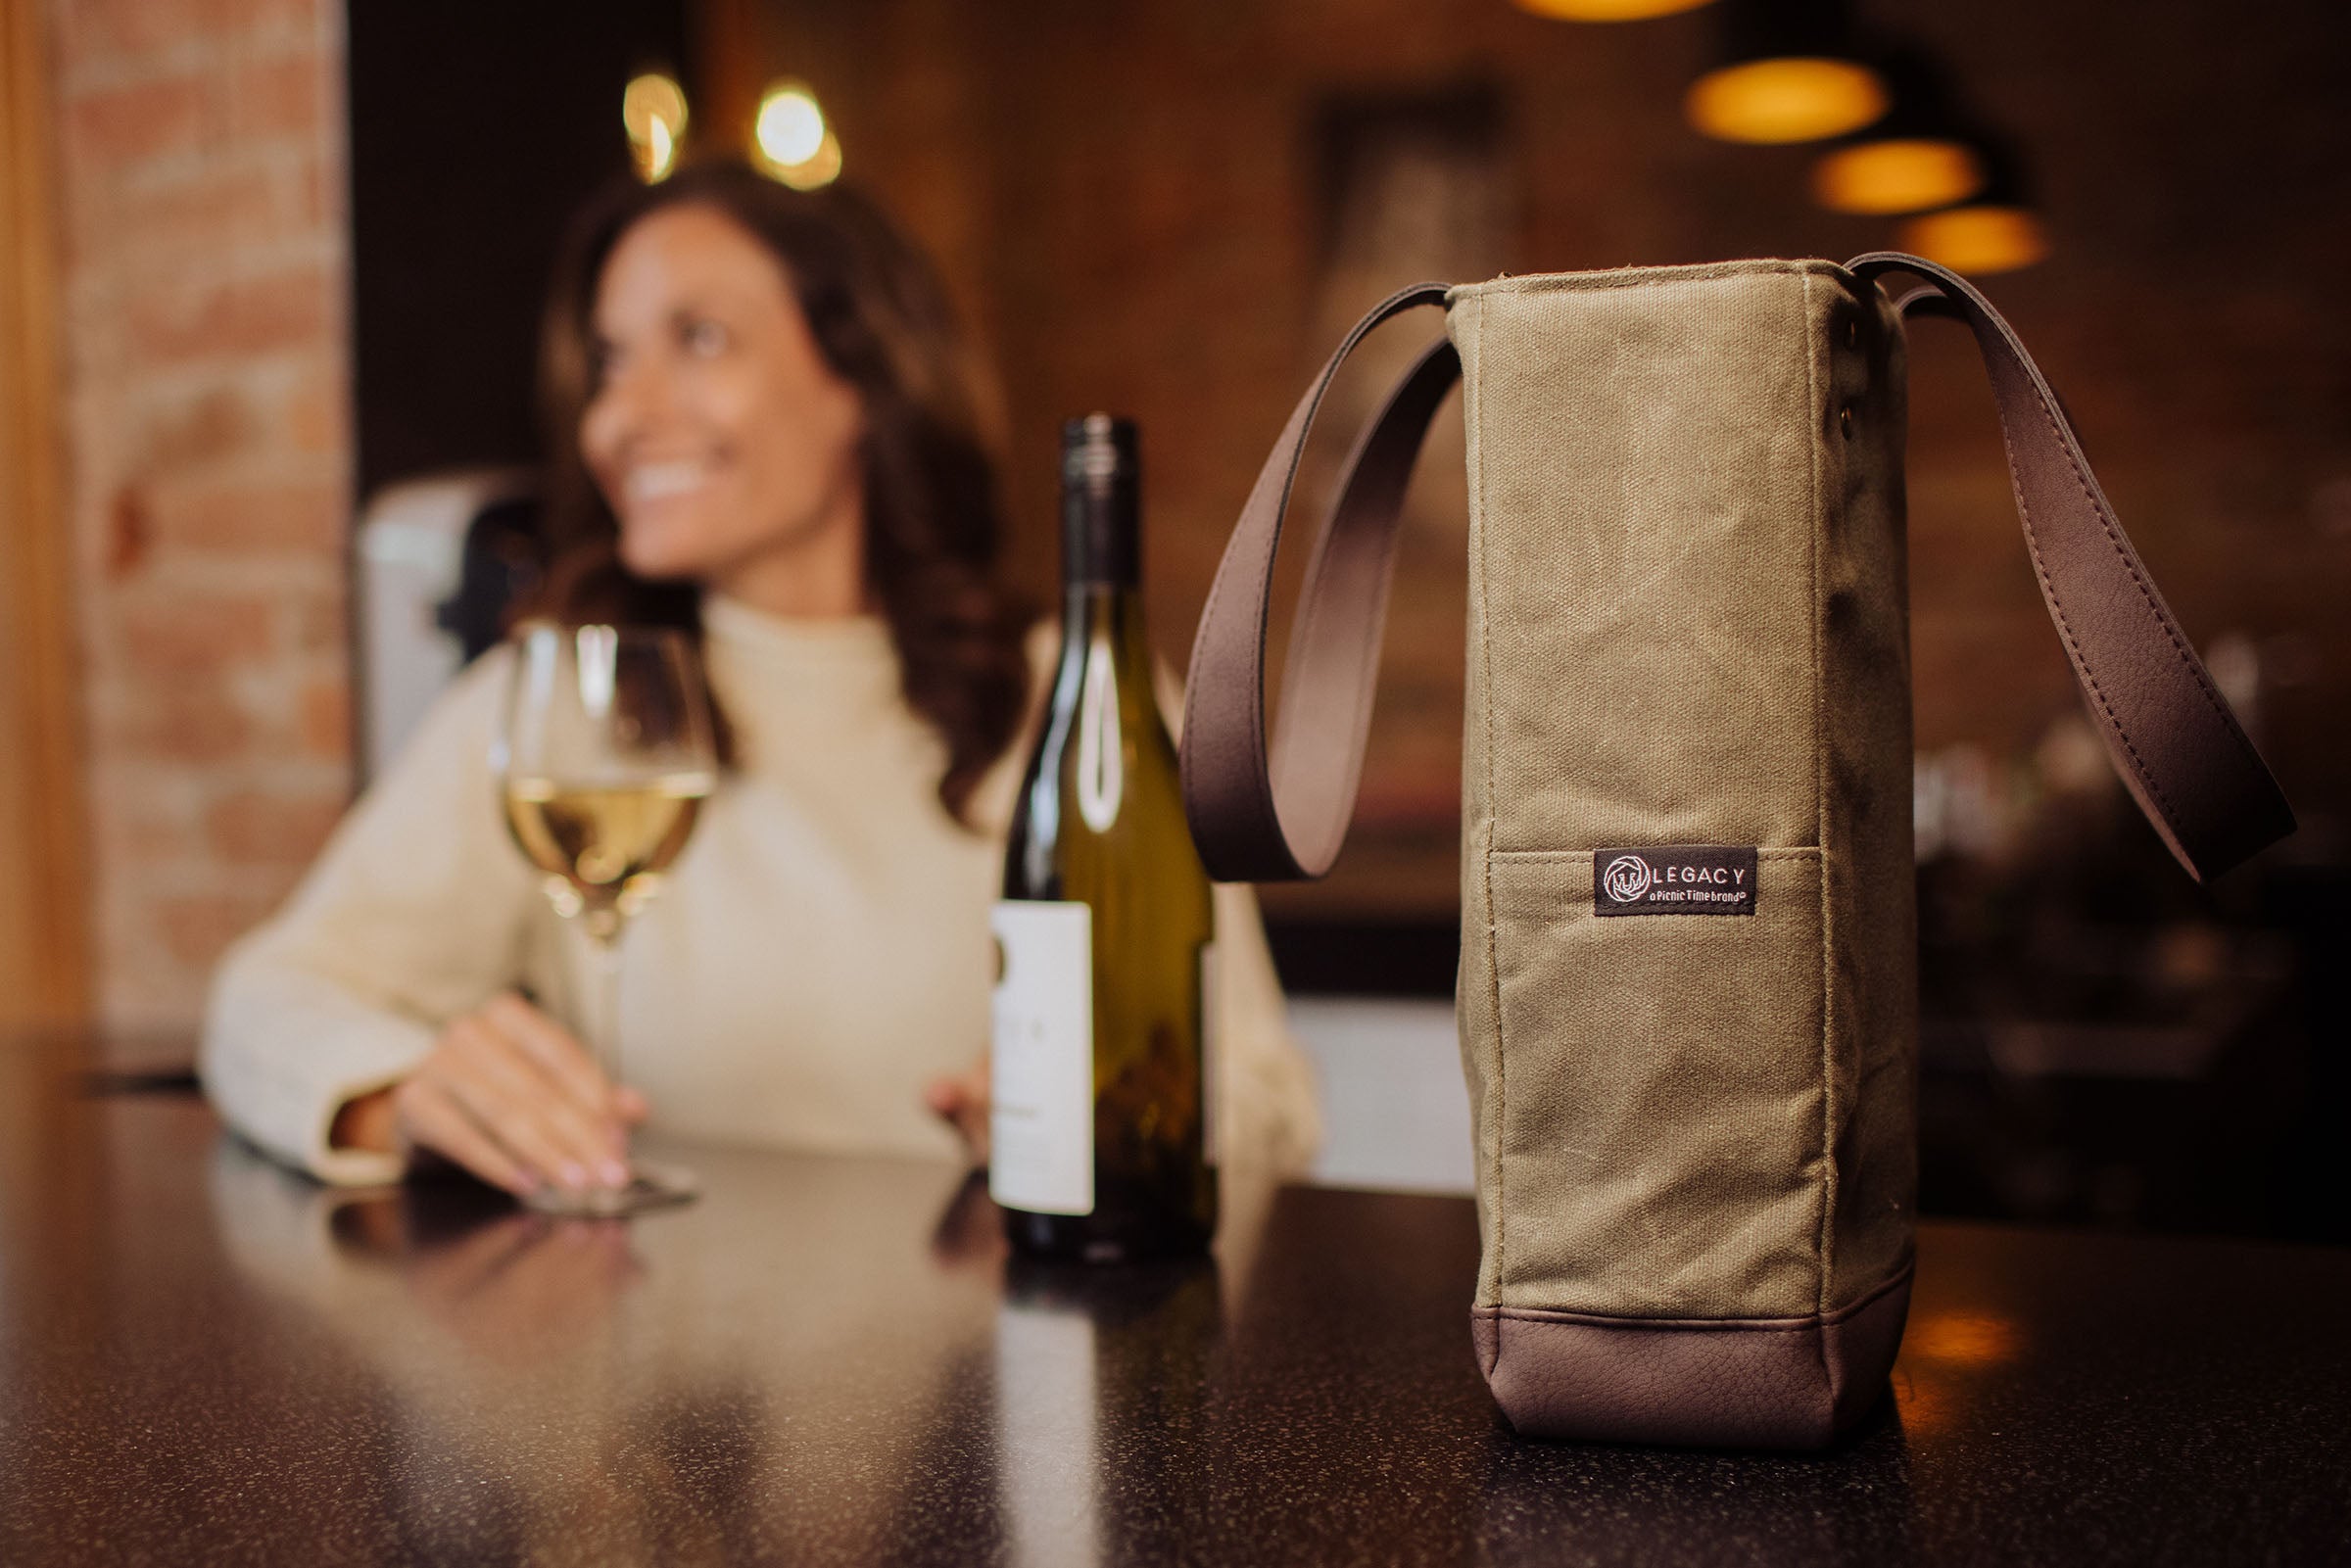 2 Bottle Insulated Wine Cooler Bag